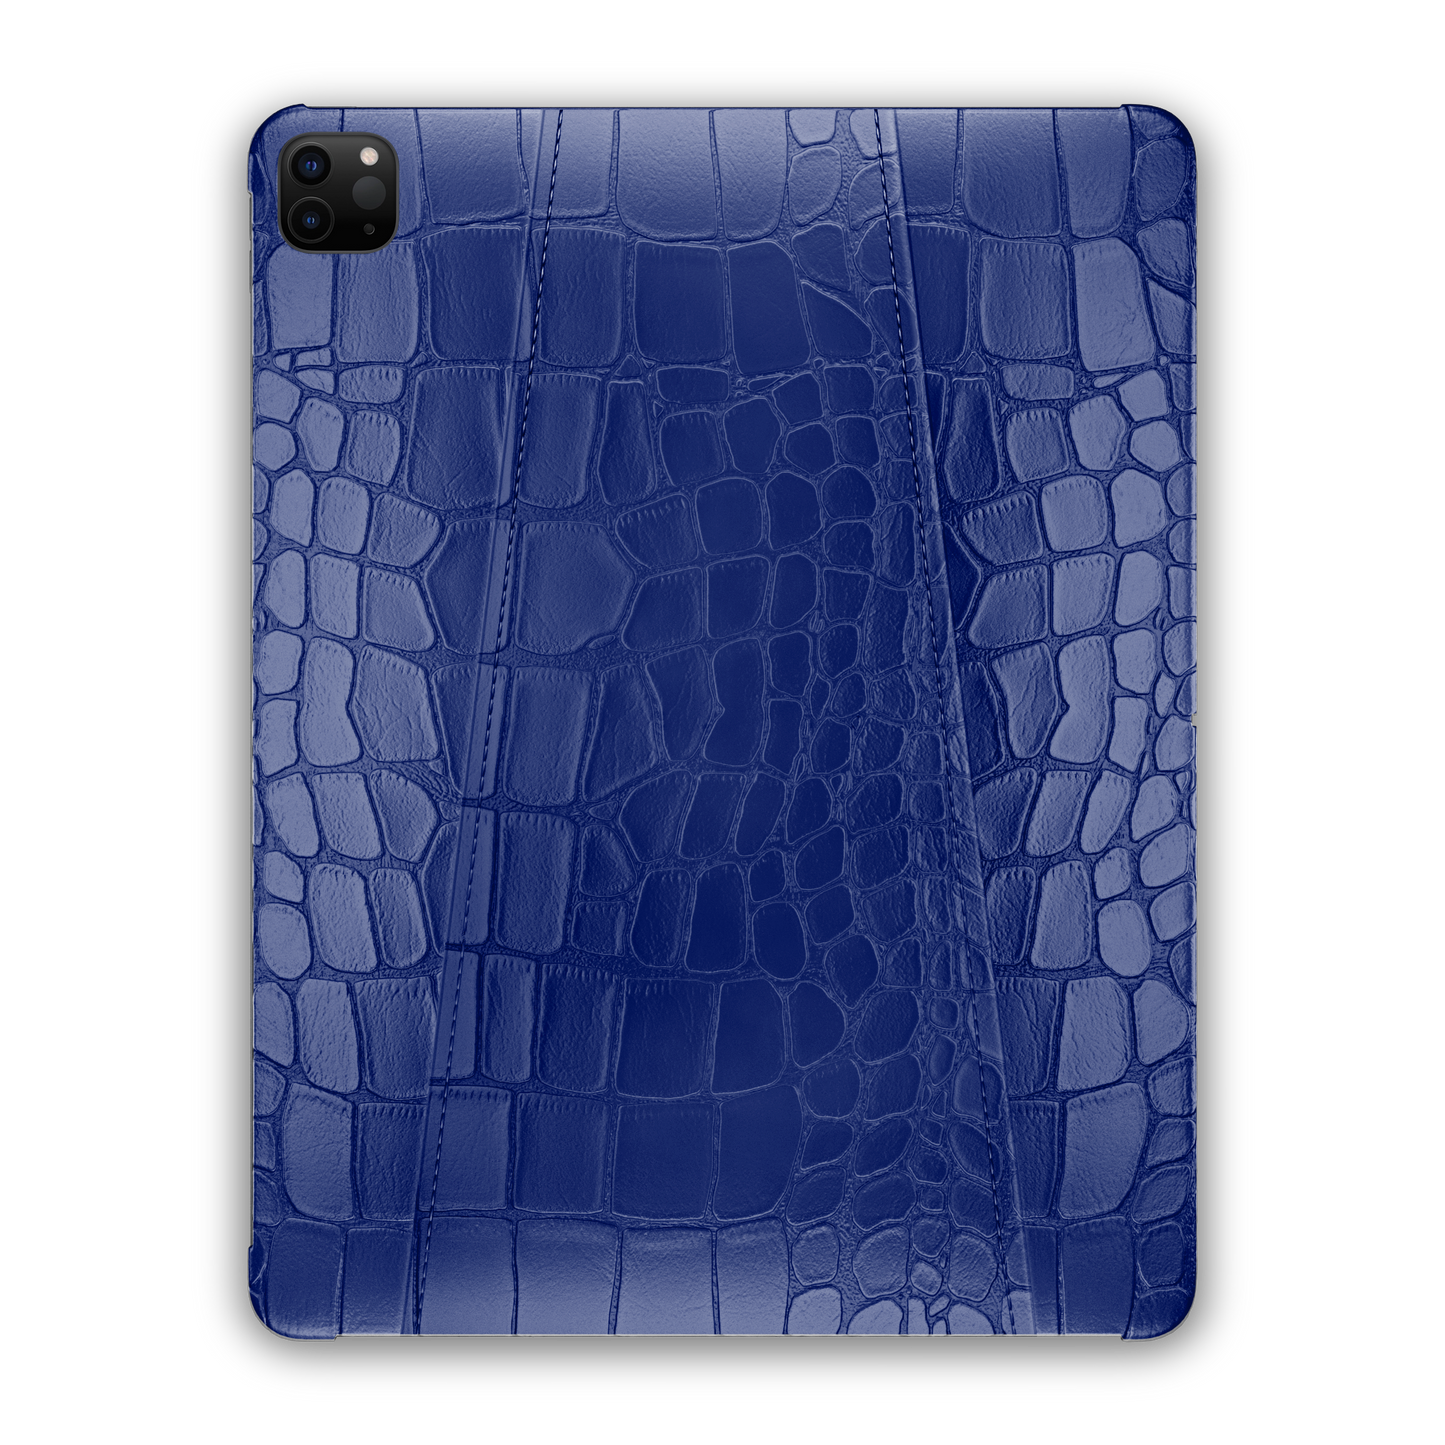 Ipad Pro (6th Gen) 12.9-inch Blue Peony Alligator Case